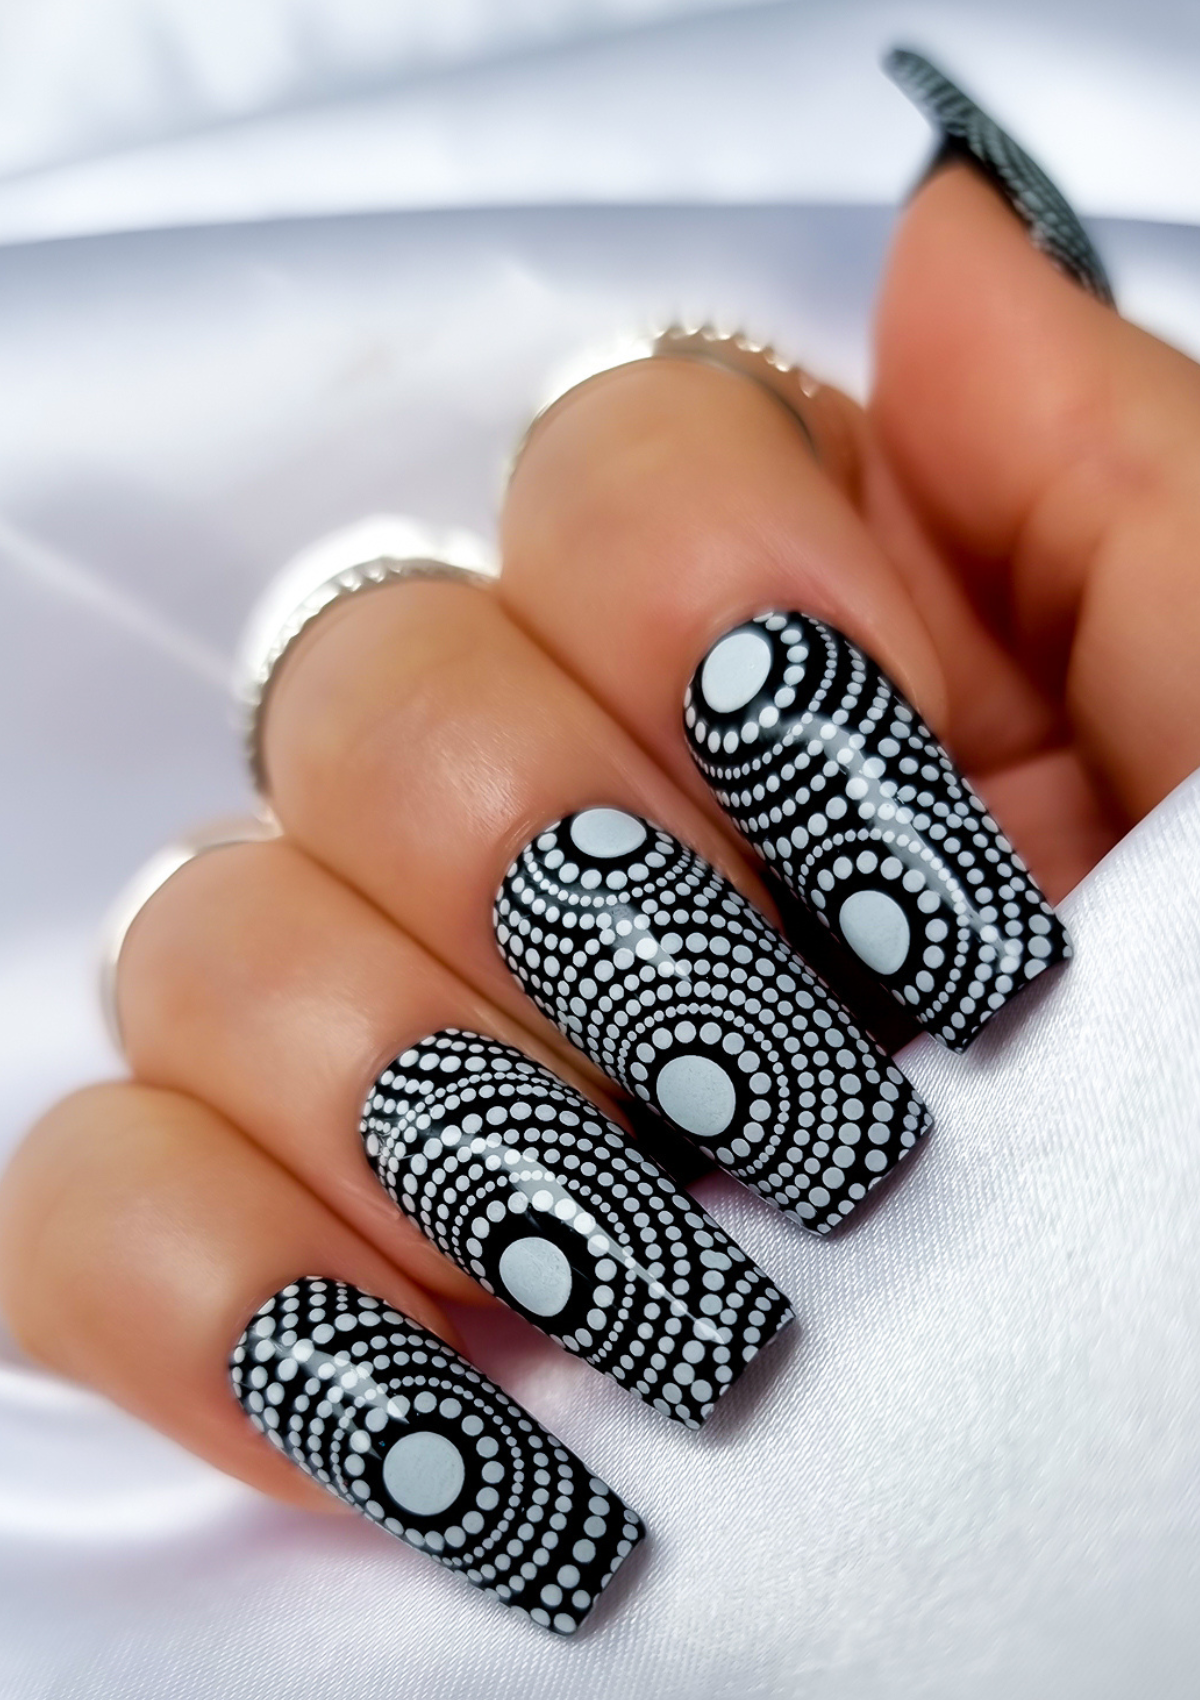 Black nails with white Aboriginal Australian nail art designs